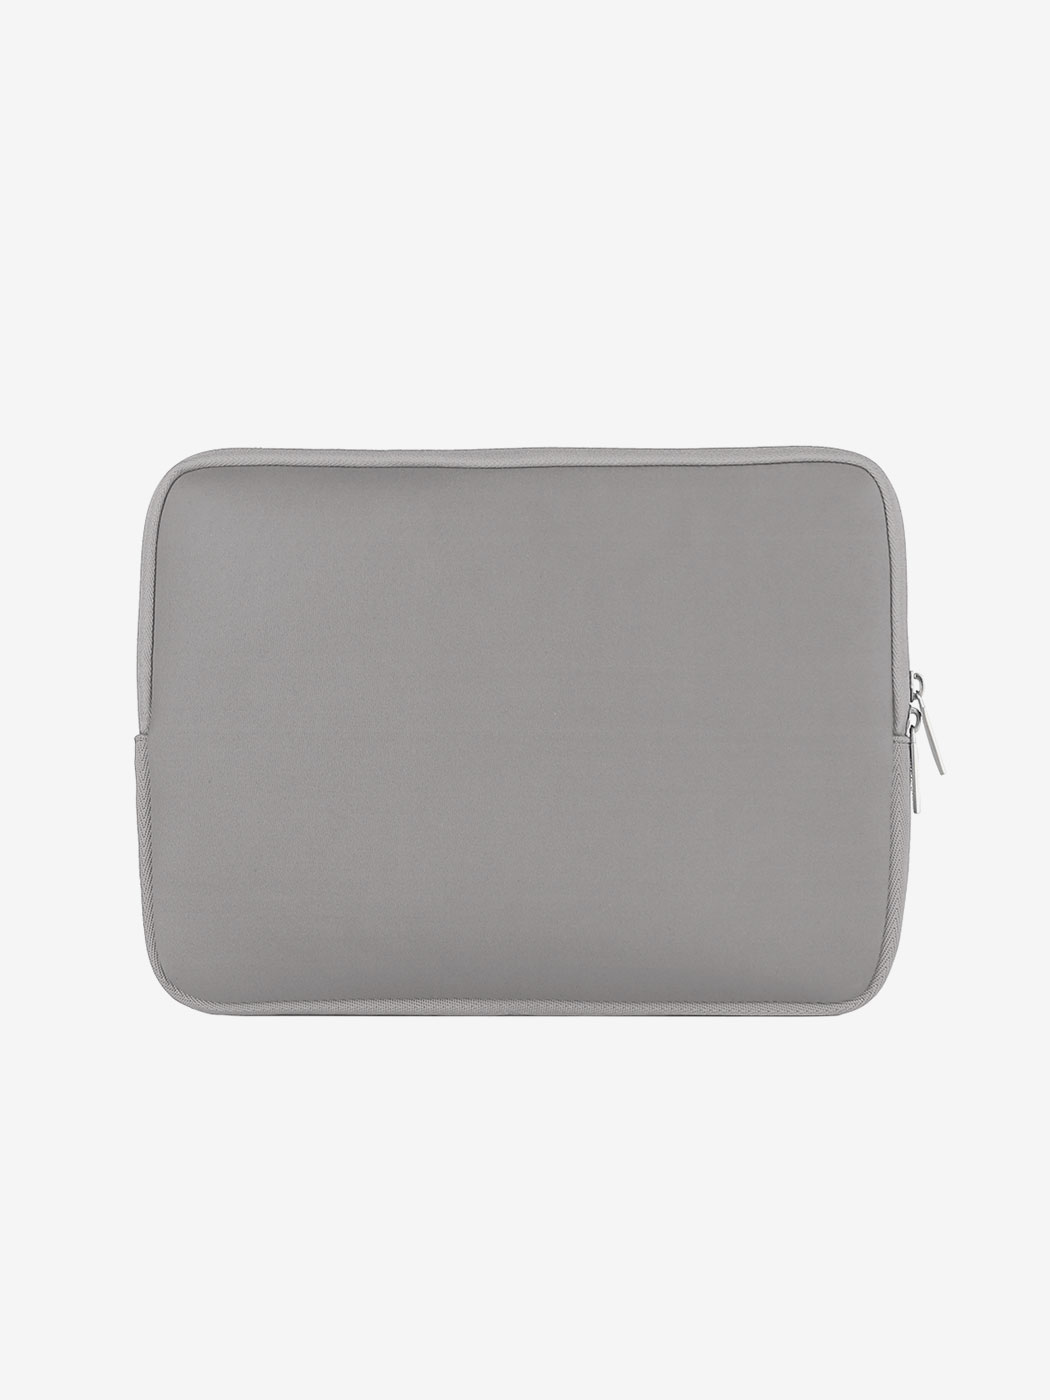 Pomologic Neoprene Sleeve MacBook front in grey